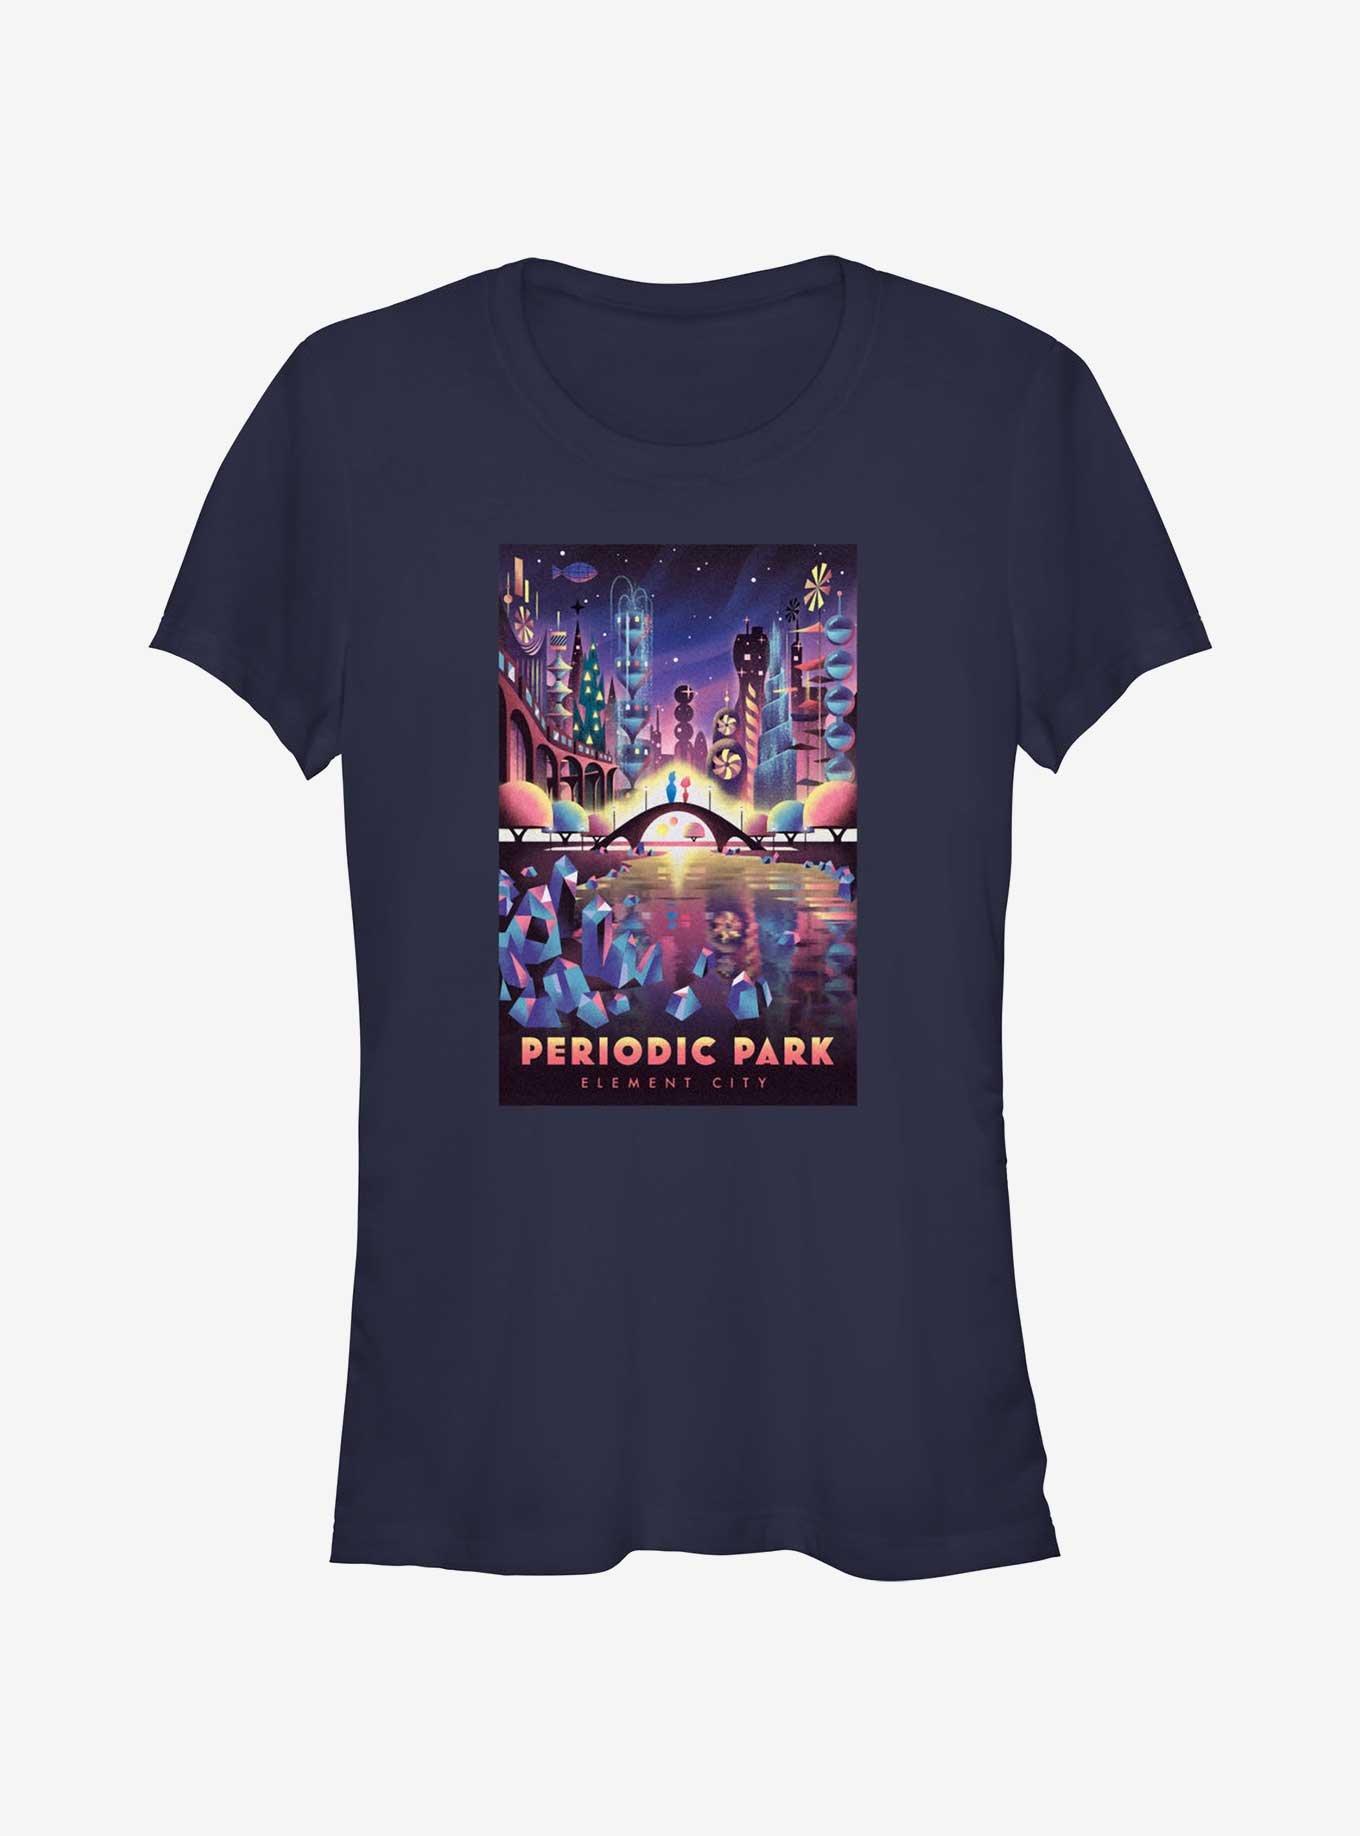 Disney Pixar Elemental Periodic Park Element City Girls T-Shirt, NAVY, hi-res